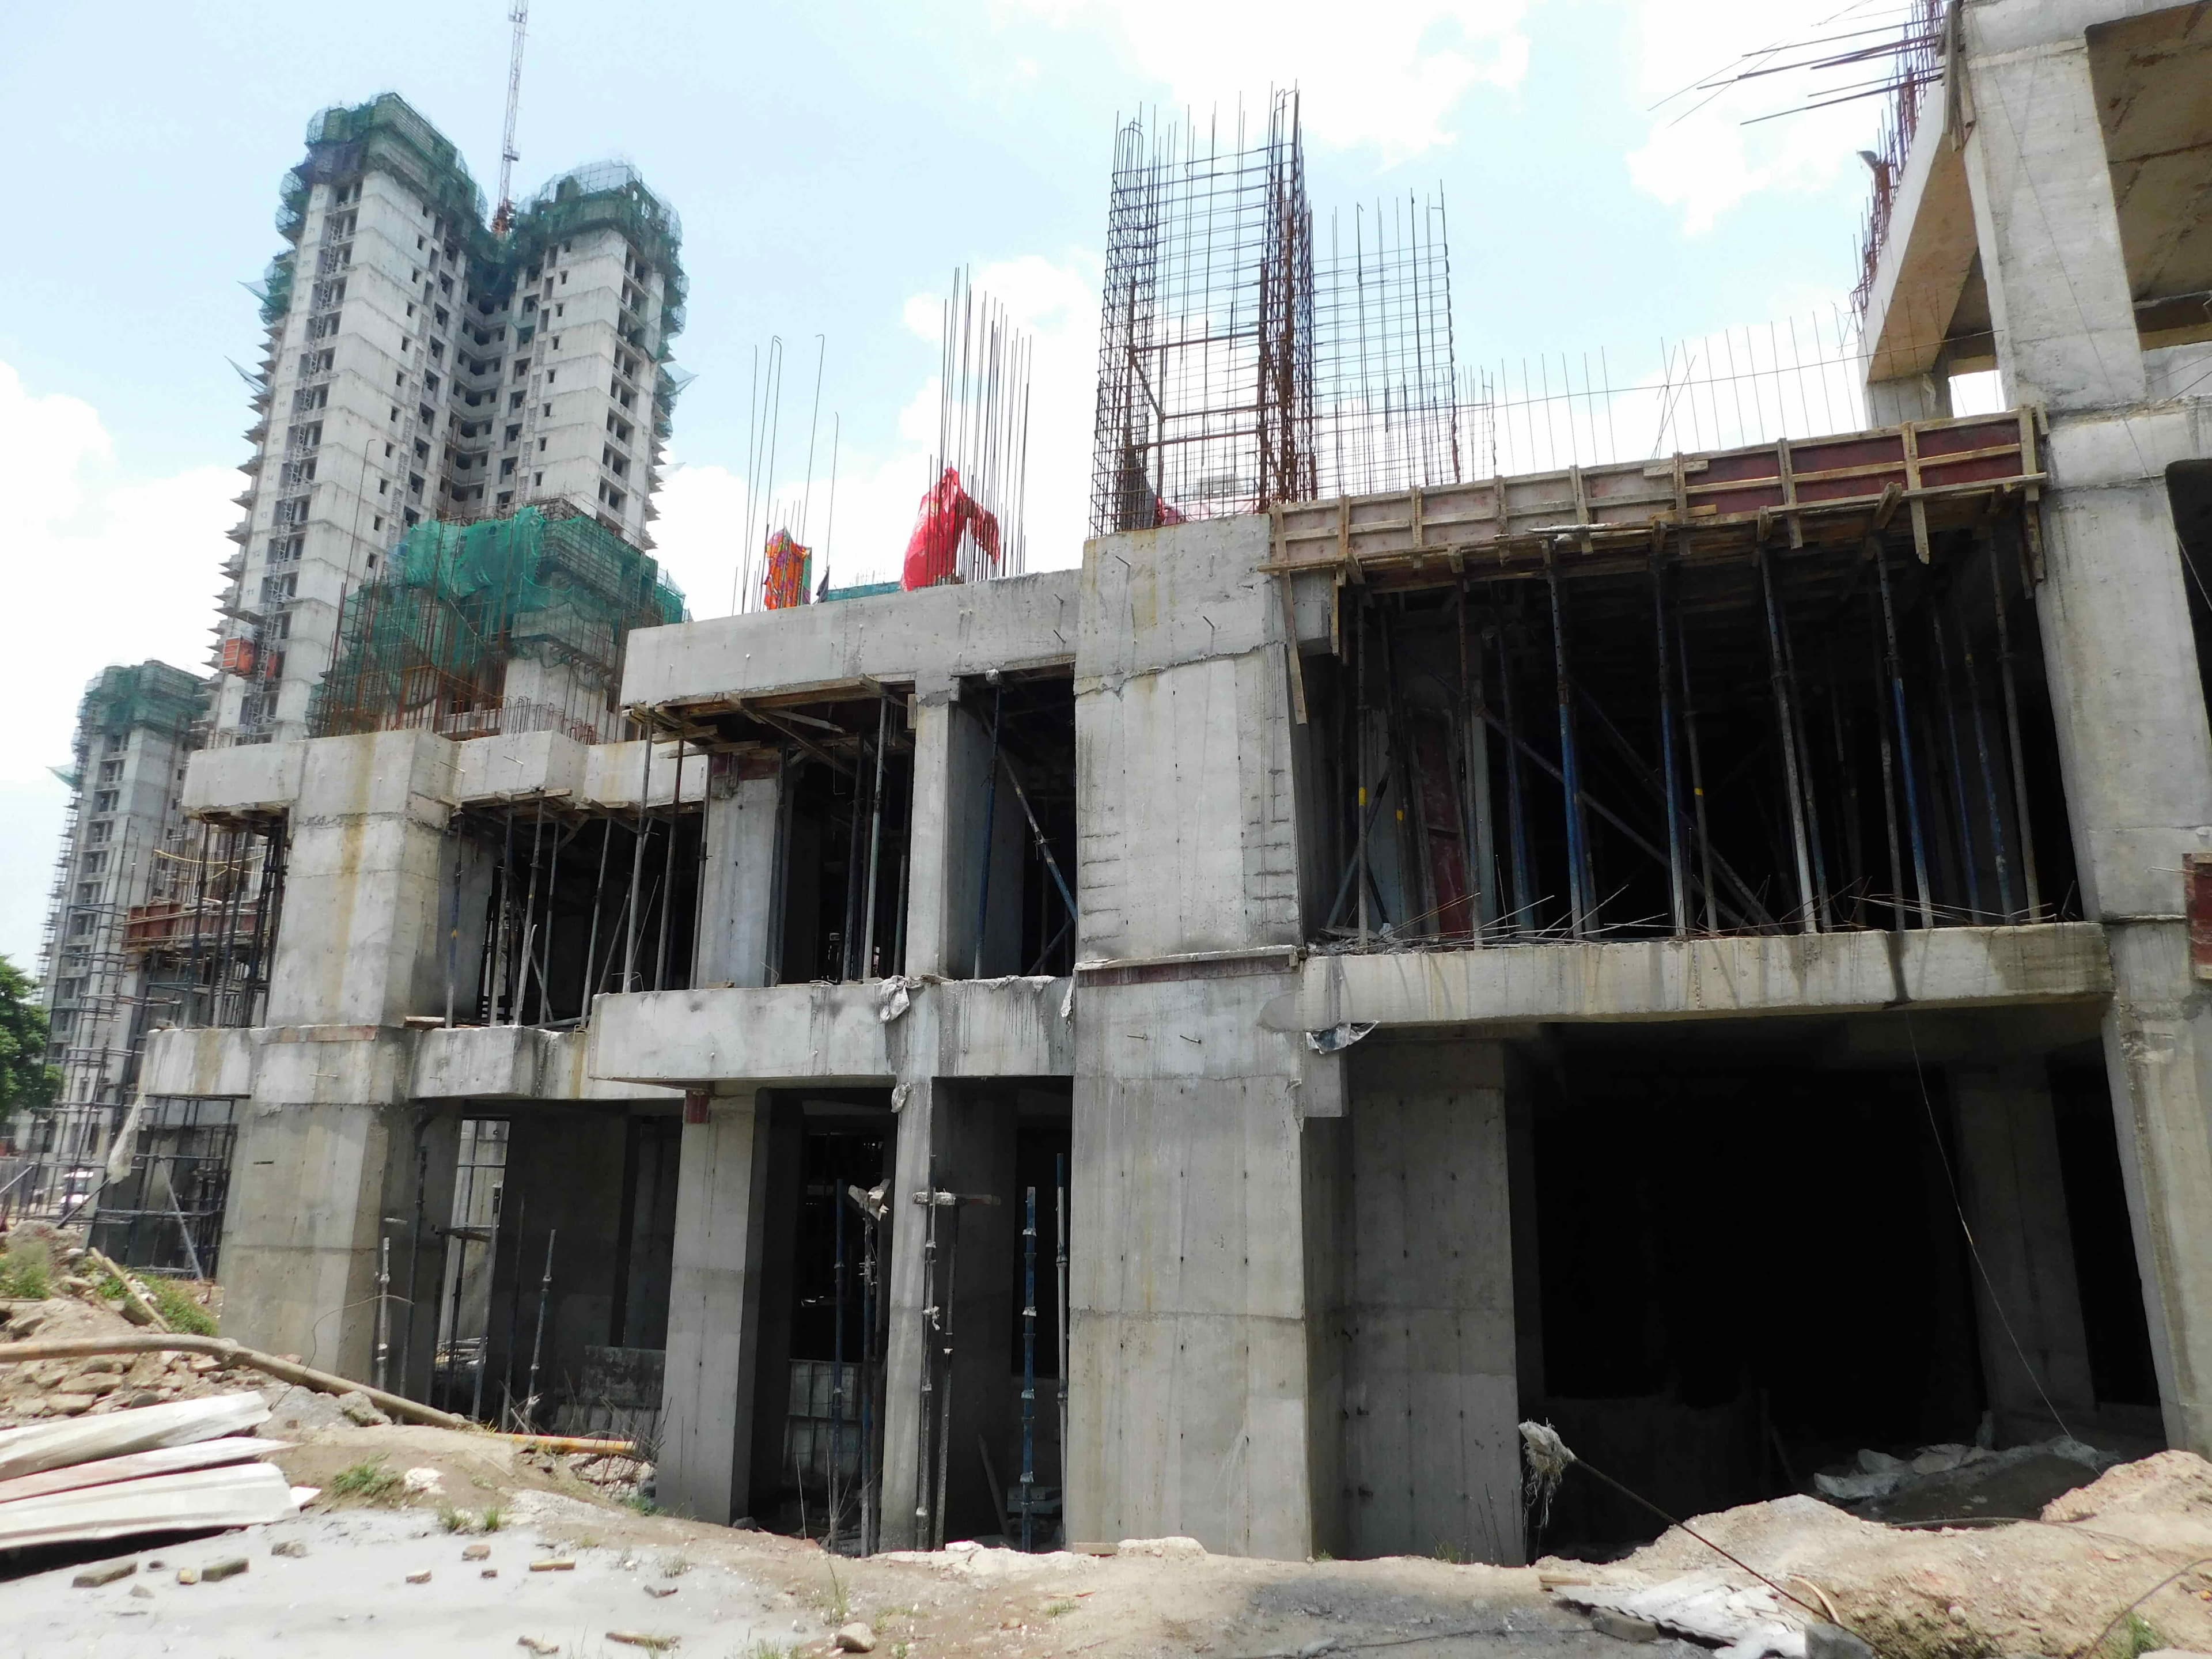 Sangam Tower 4 Podium 2 Roof Casting work in progress